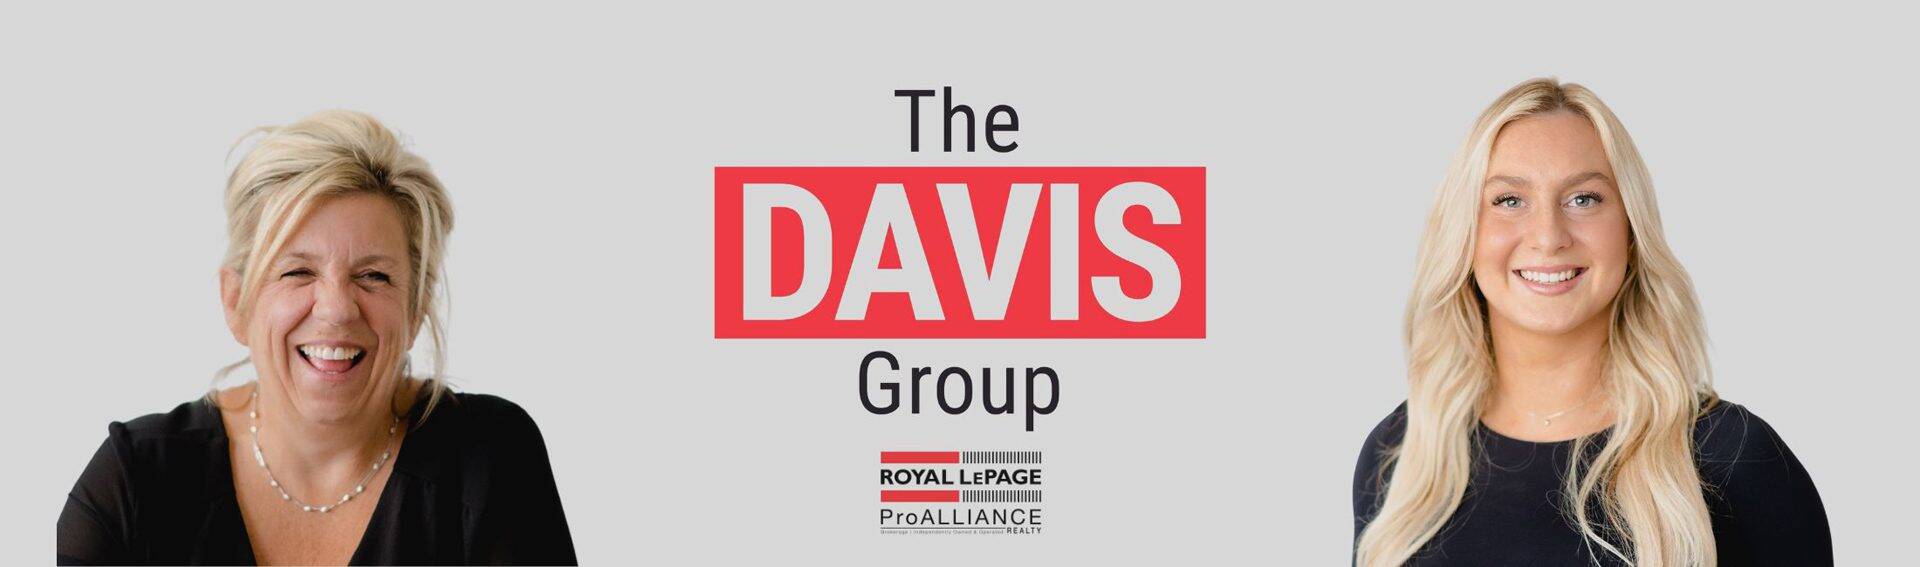 Janice Davis Royal LePage The Davis Group